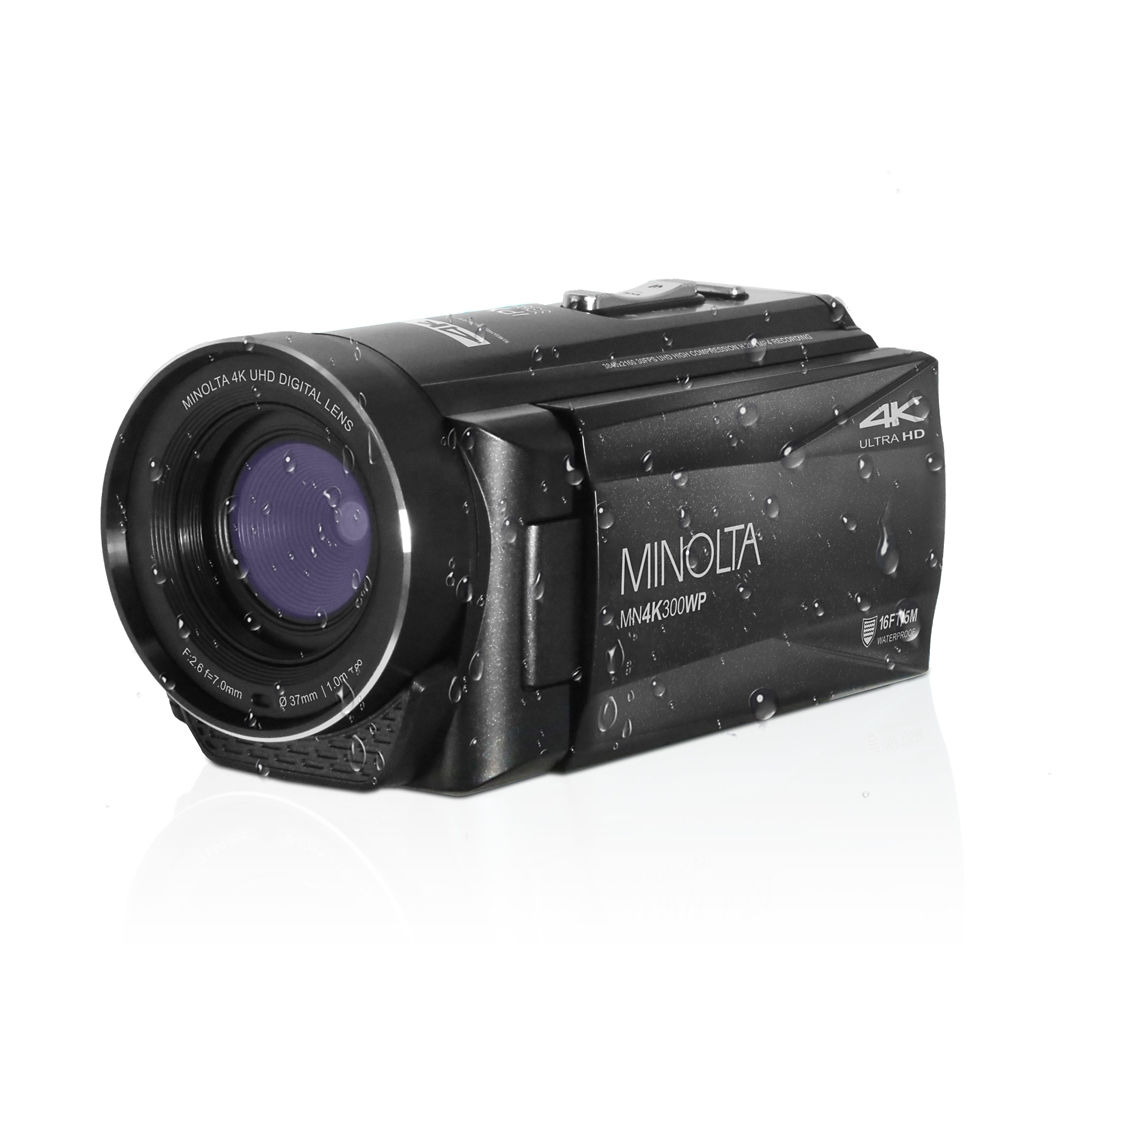 Minolta MN4K300WP 4K Ultra HD / 56 MP Waterproof Camcorder - Image 2 of 5